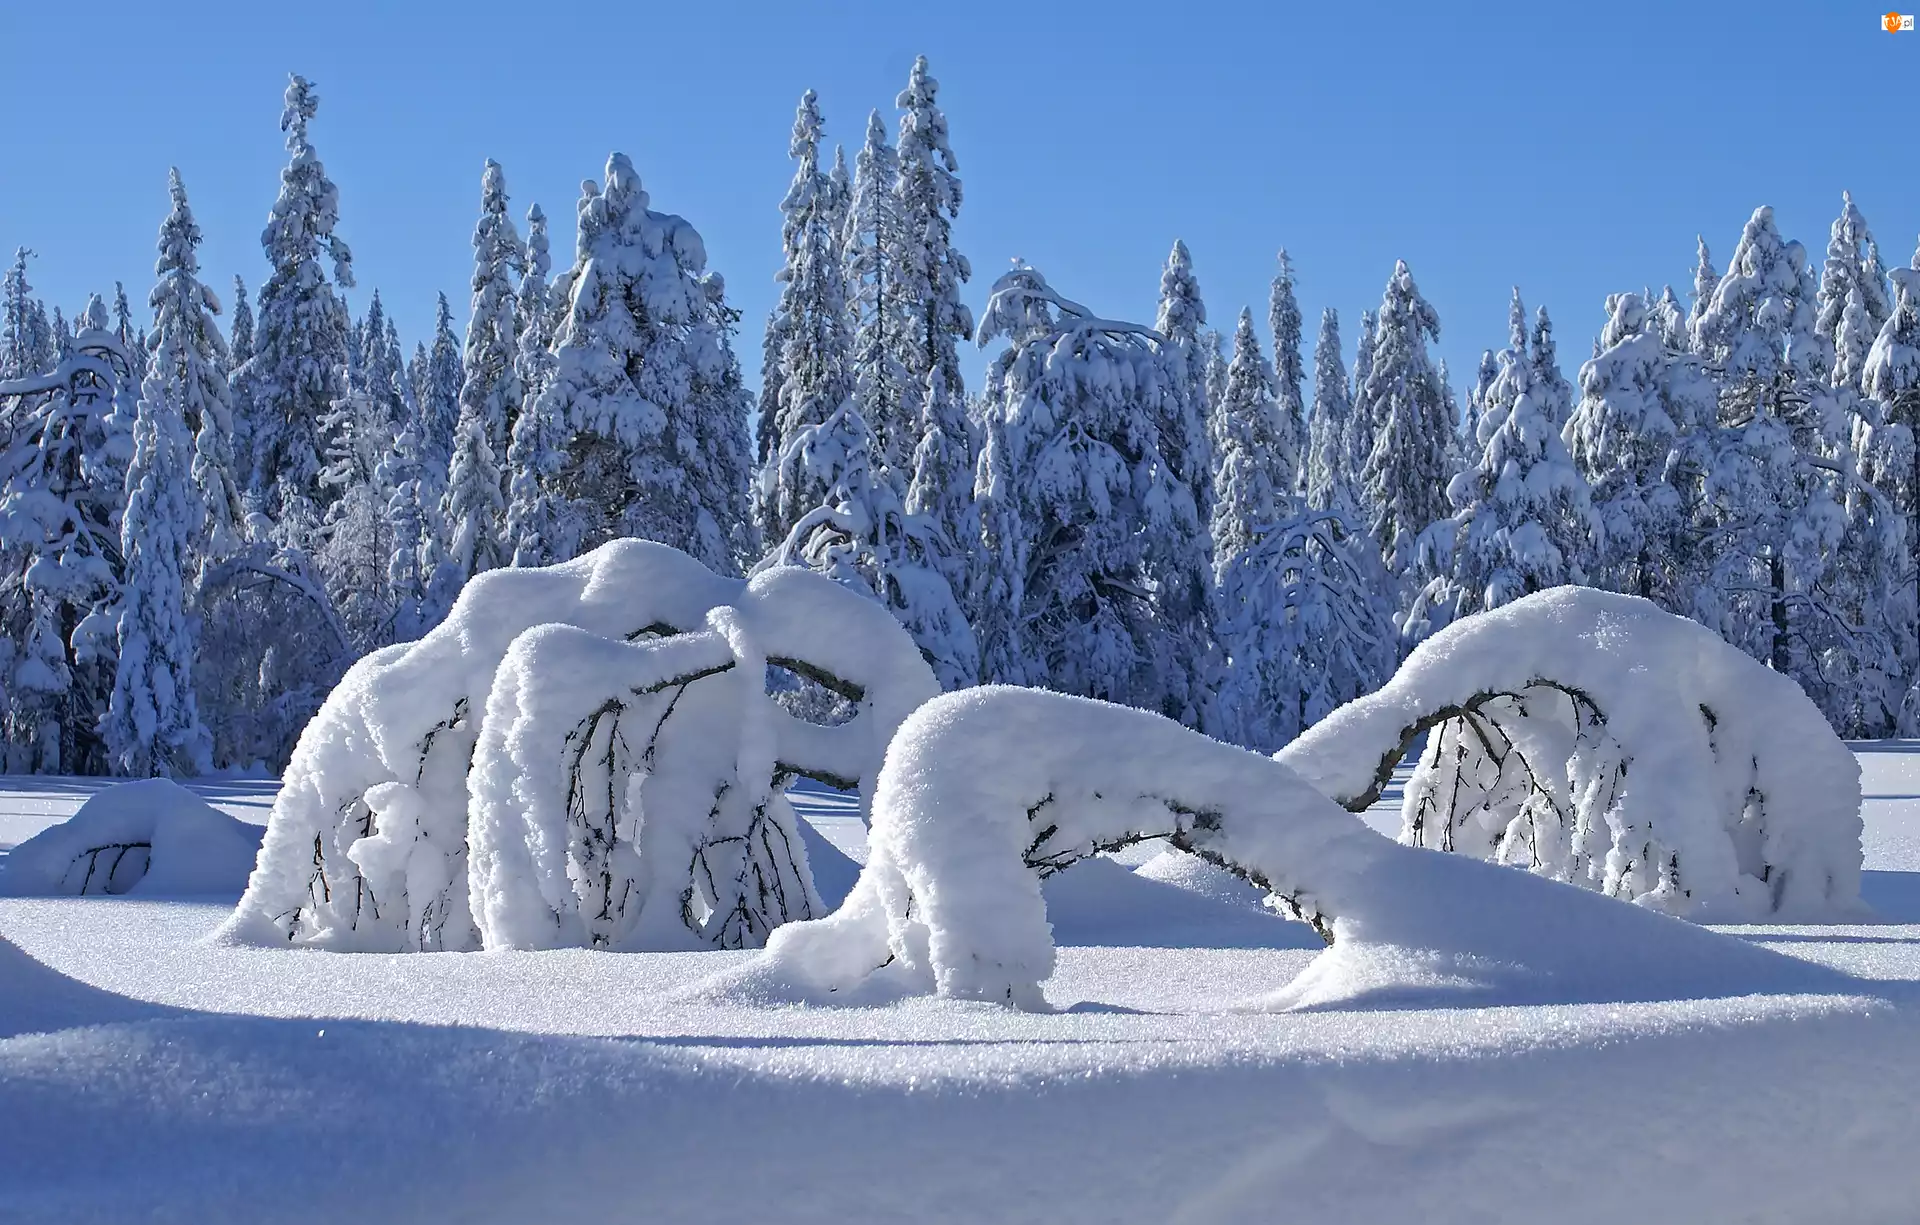 Śnieg, Las, Drzewa